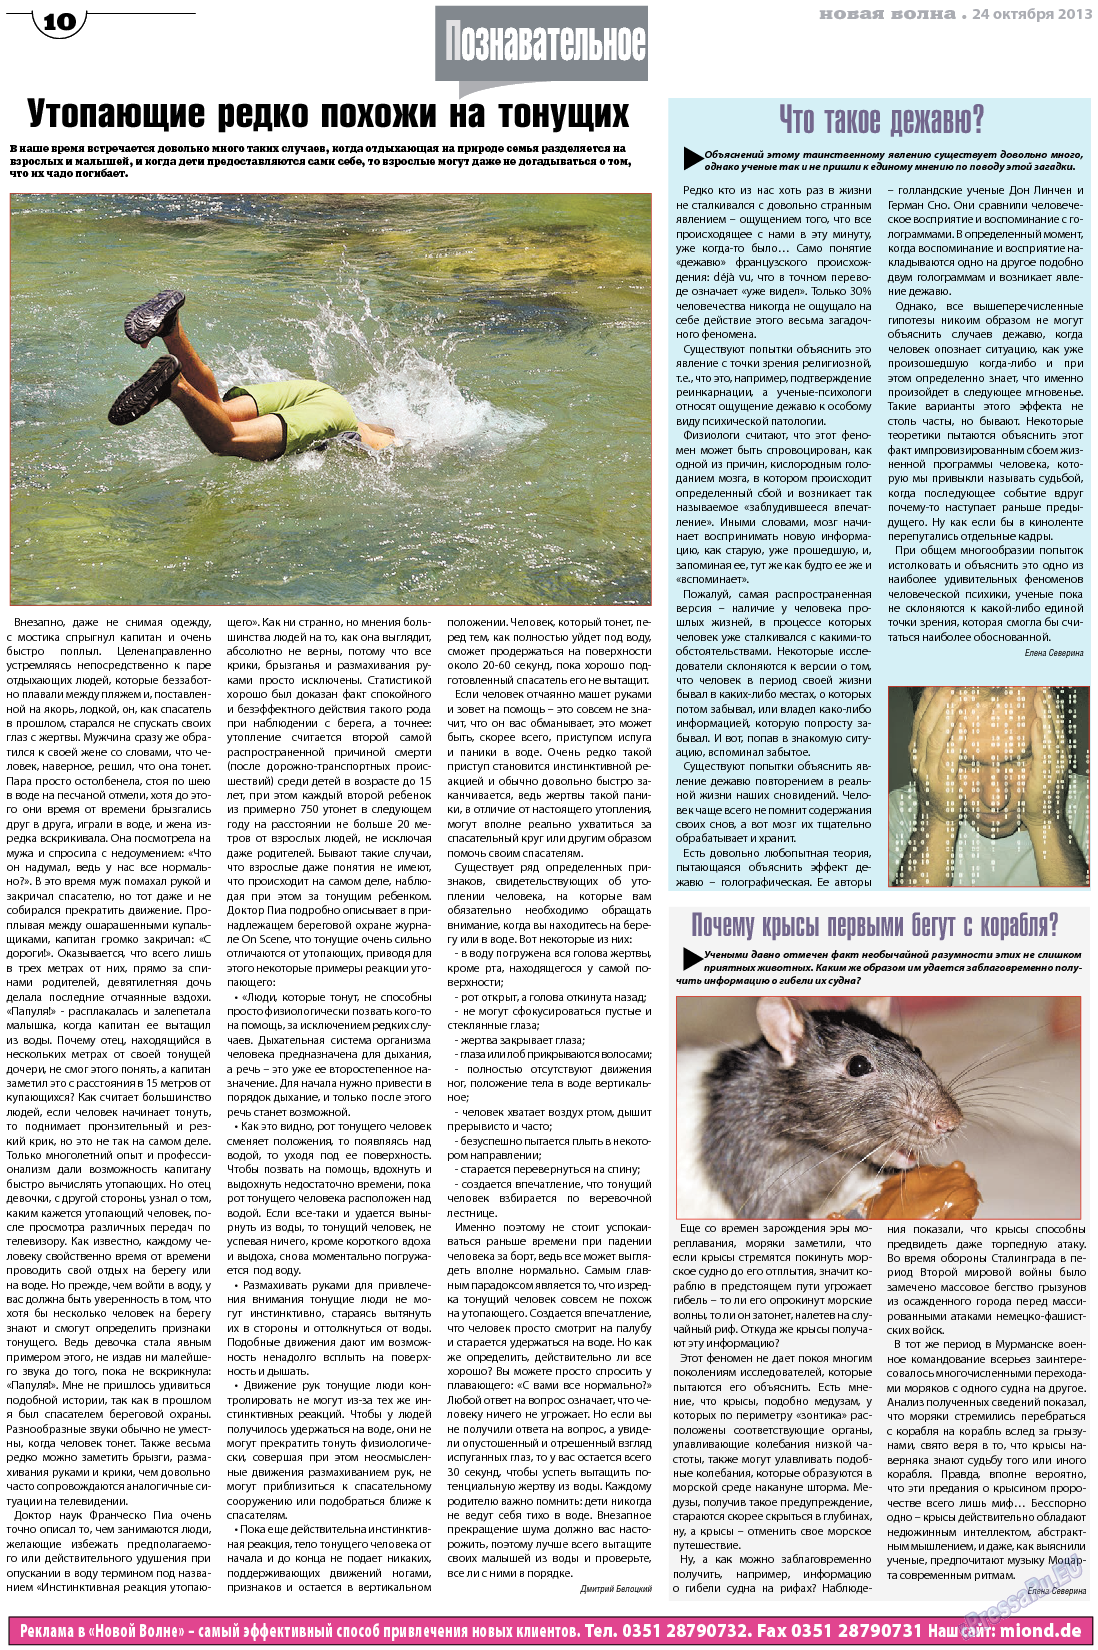 Новая Wолна, газета. 2013 №43 стр.10